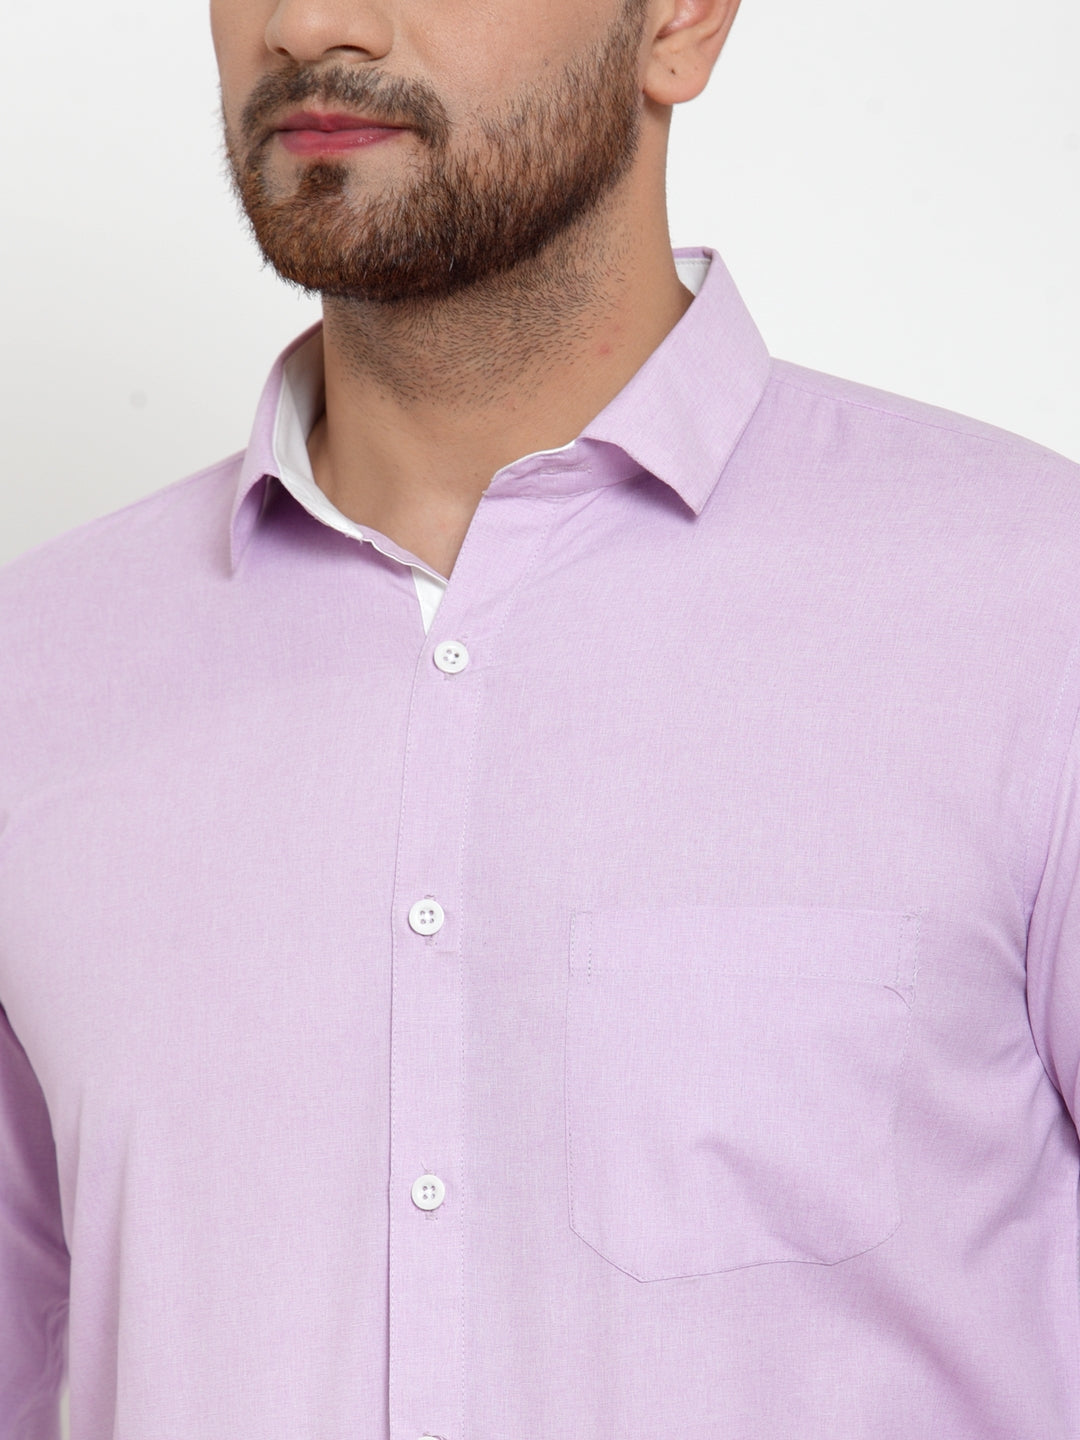 Men's Light-Purple Formal Shirt with white detailing ( SF 419Light-Purple ) - Jainish